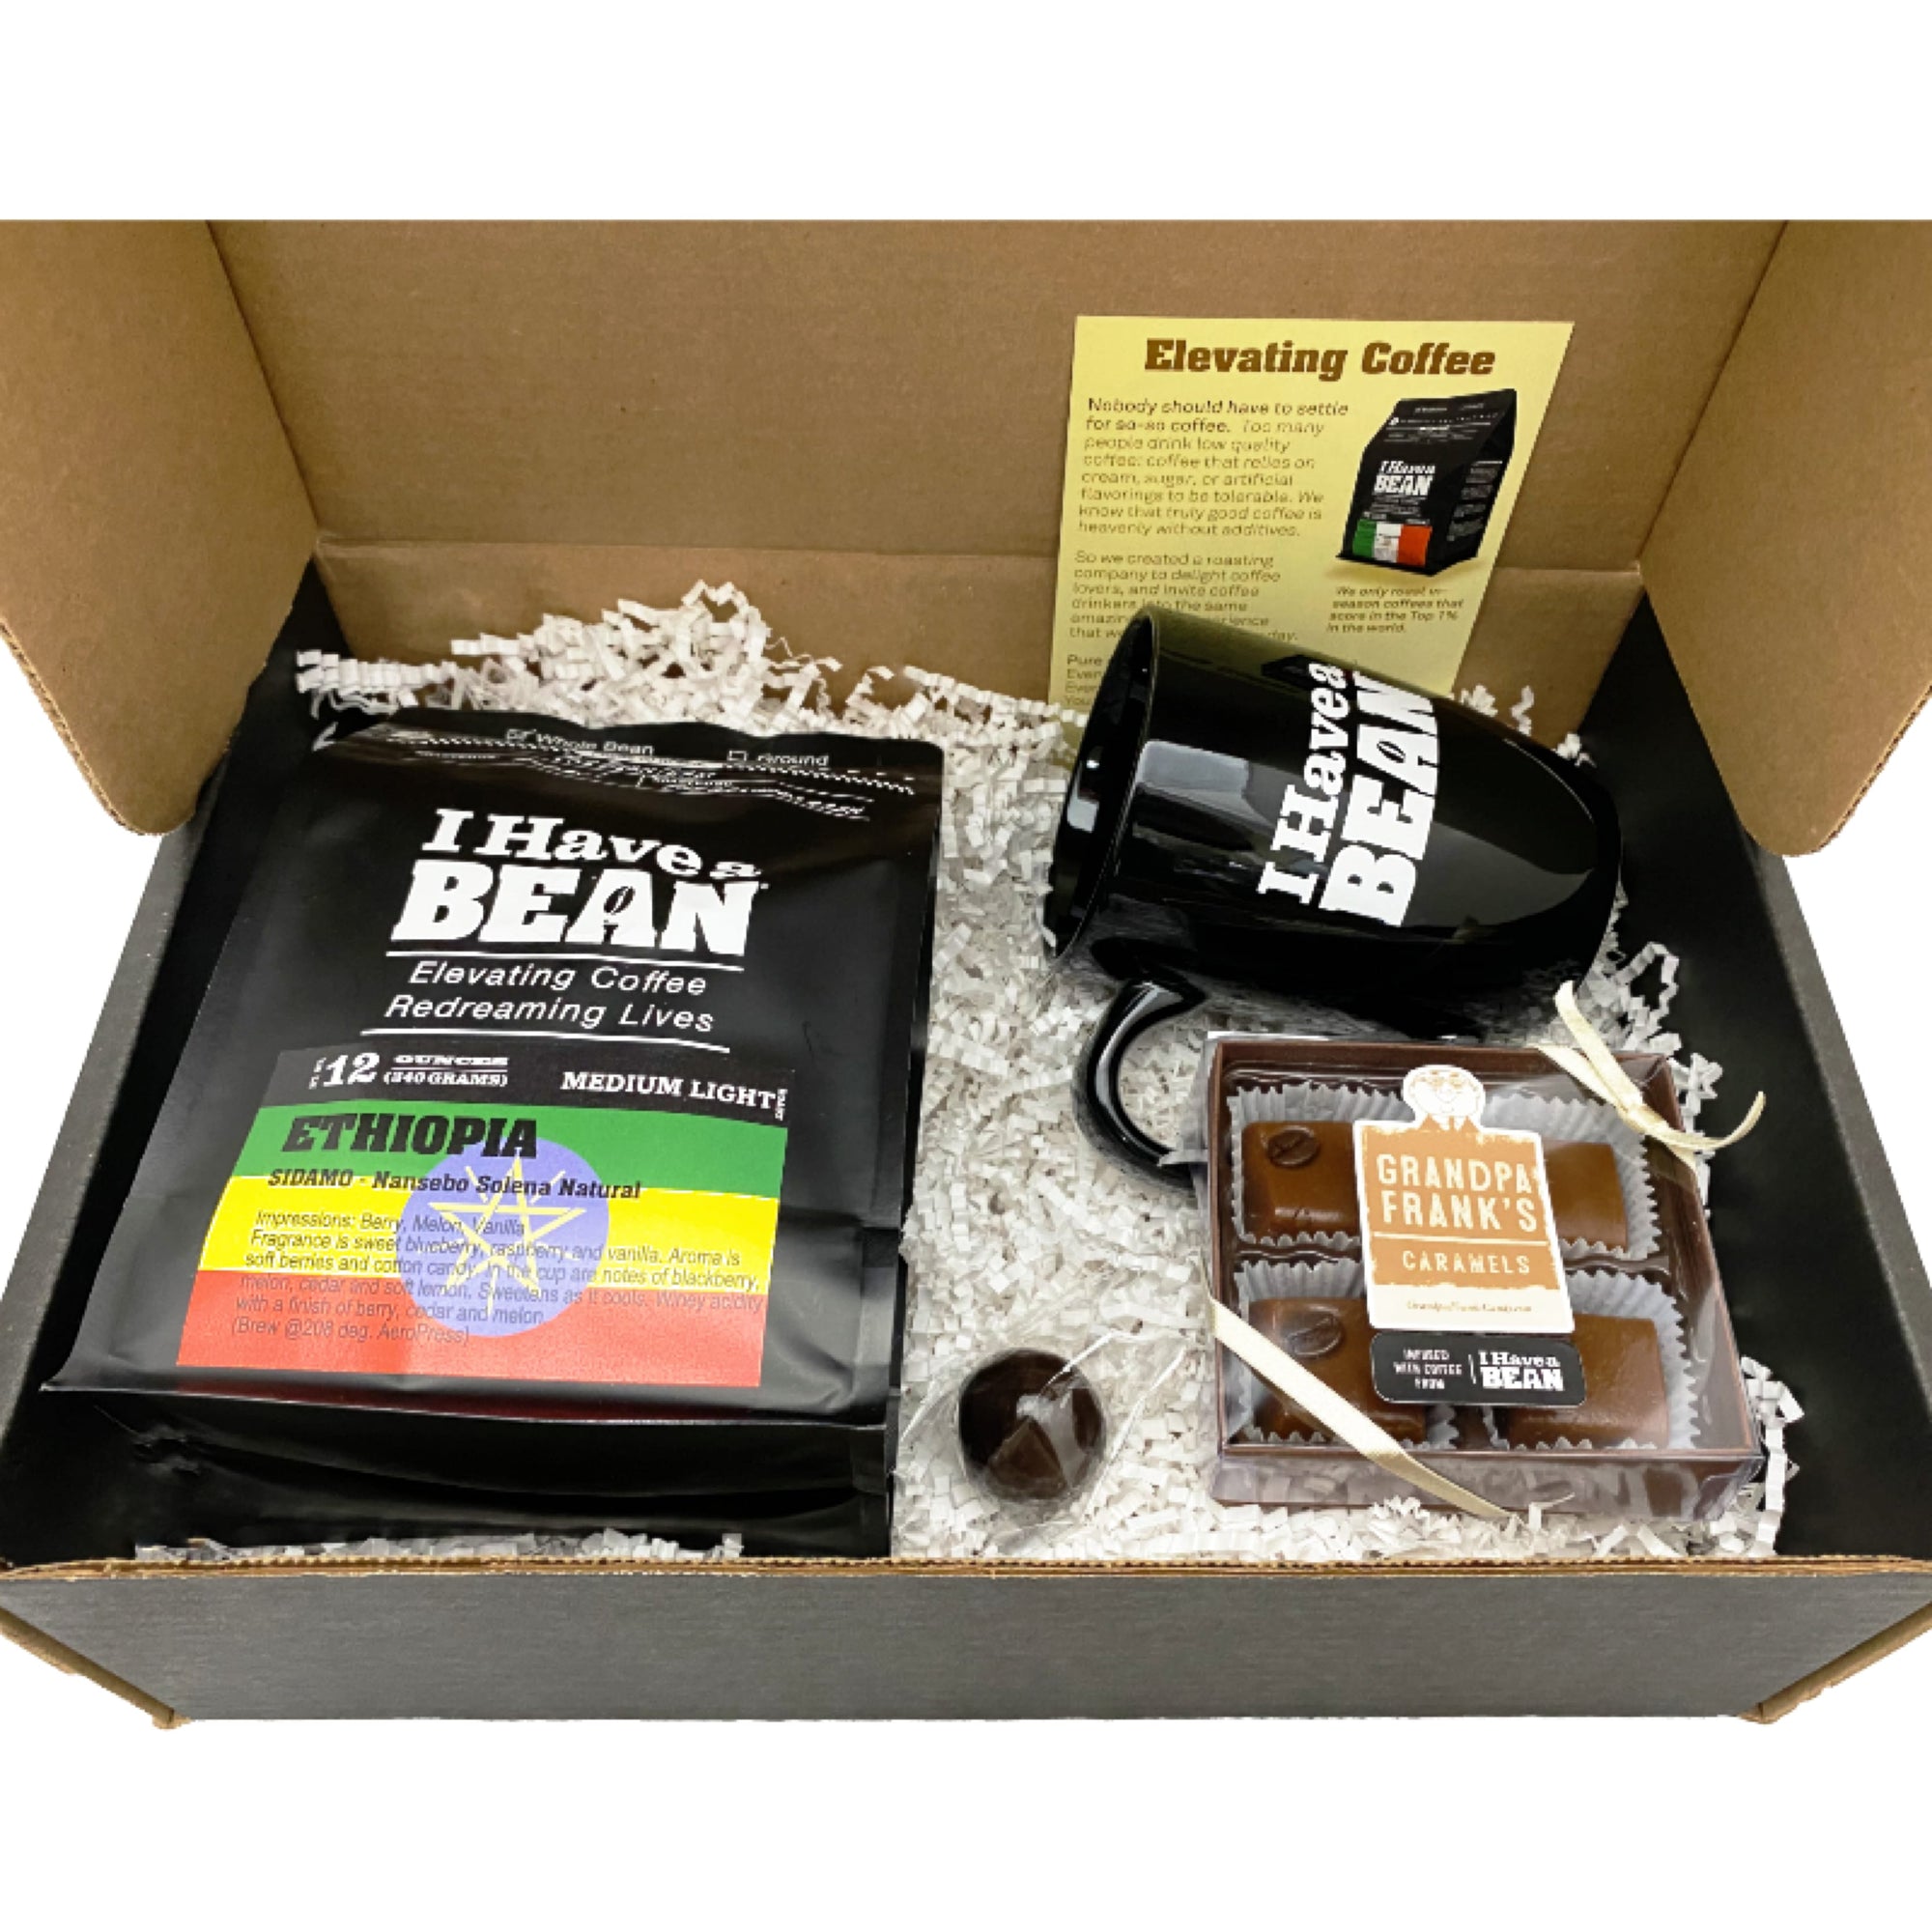 Barista's Gift Box - I Have a Bean